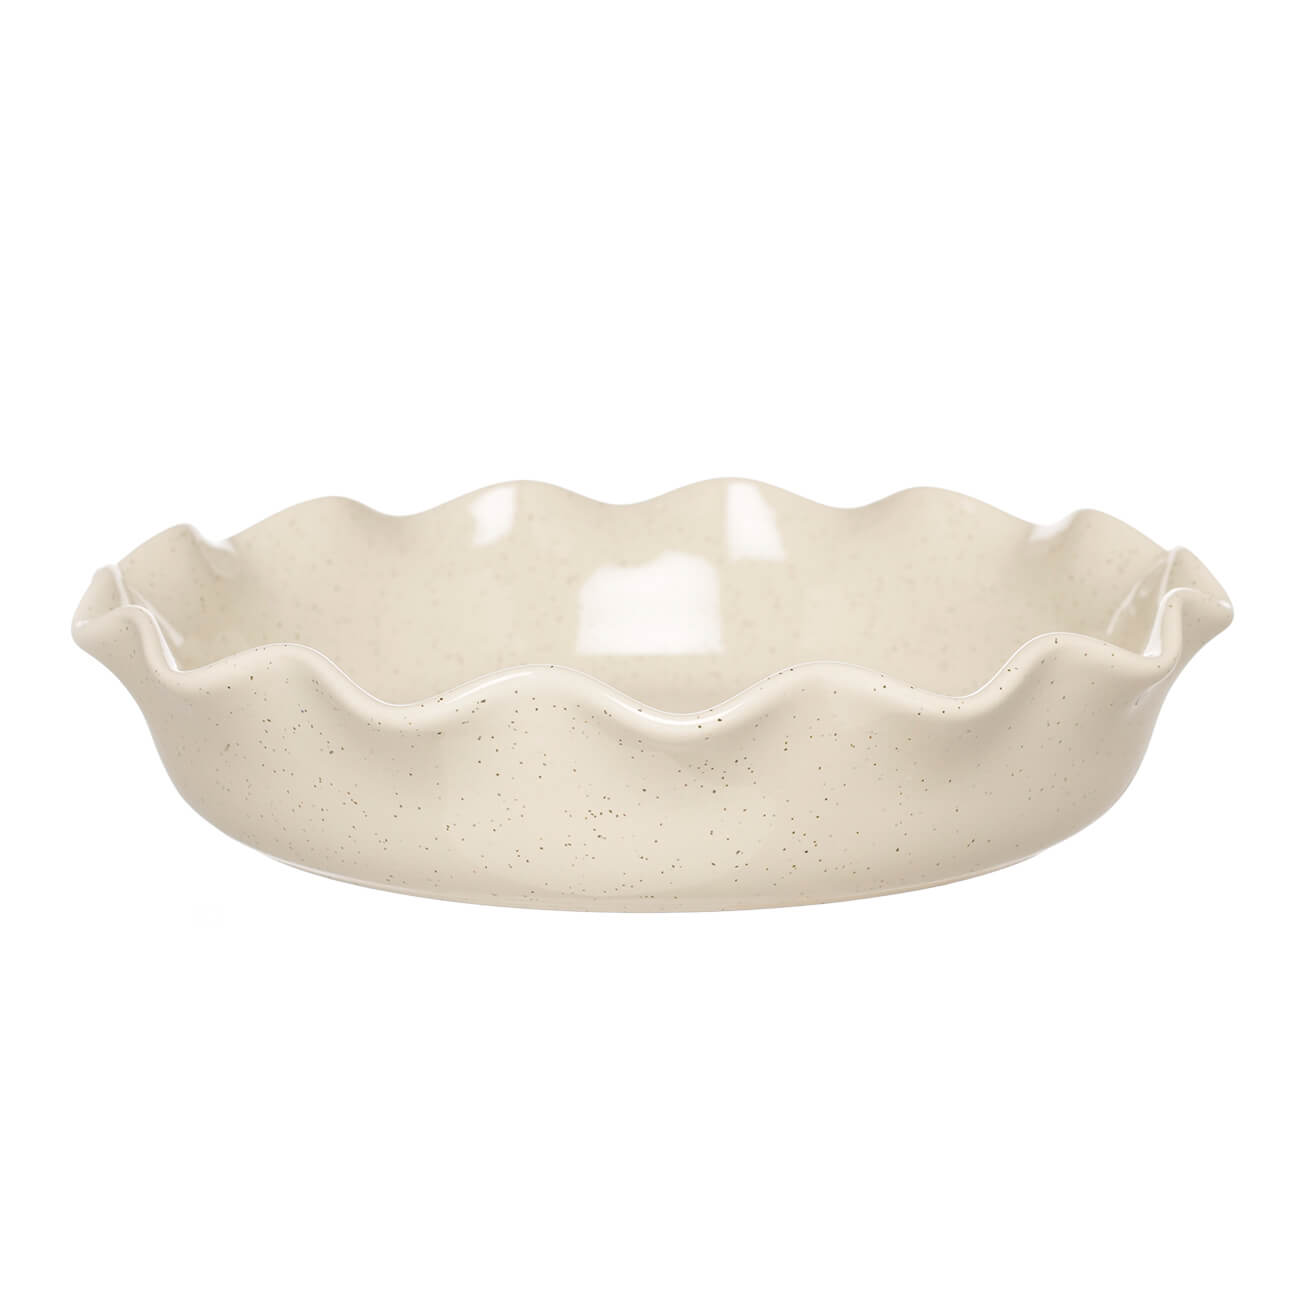 Форма для запекания, 25х5 см, керамика, круглая, молочная, в крапинку, Волна, Cakes new форма для запекания 25 см керамика круглая молочная cakes ivory